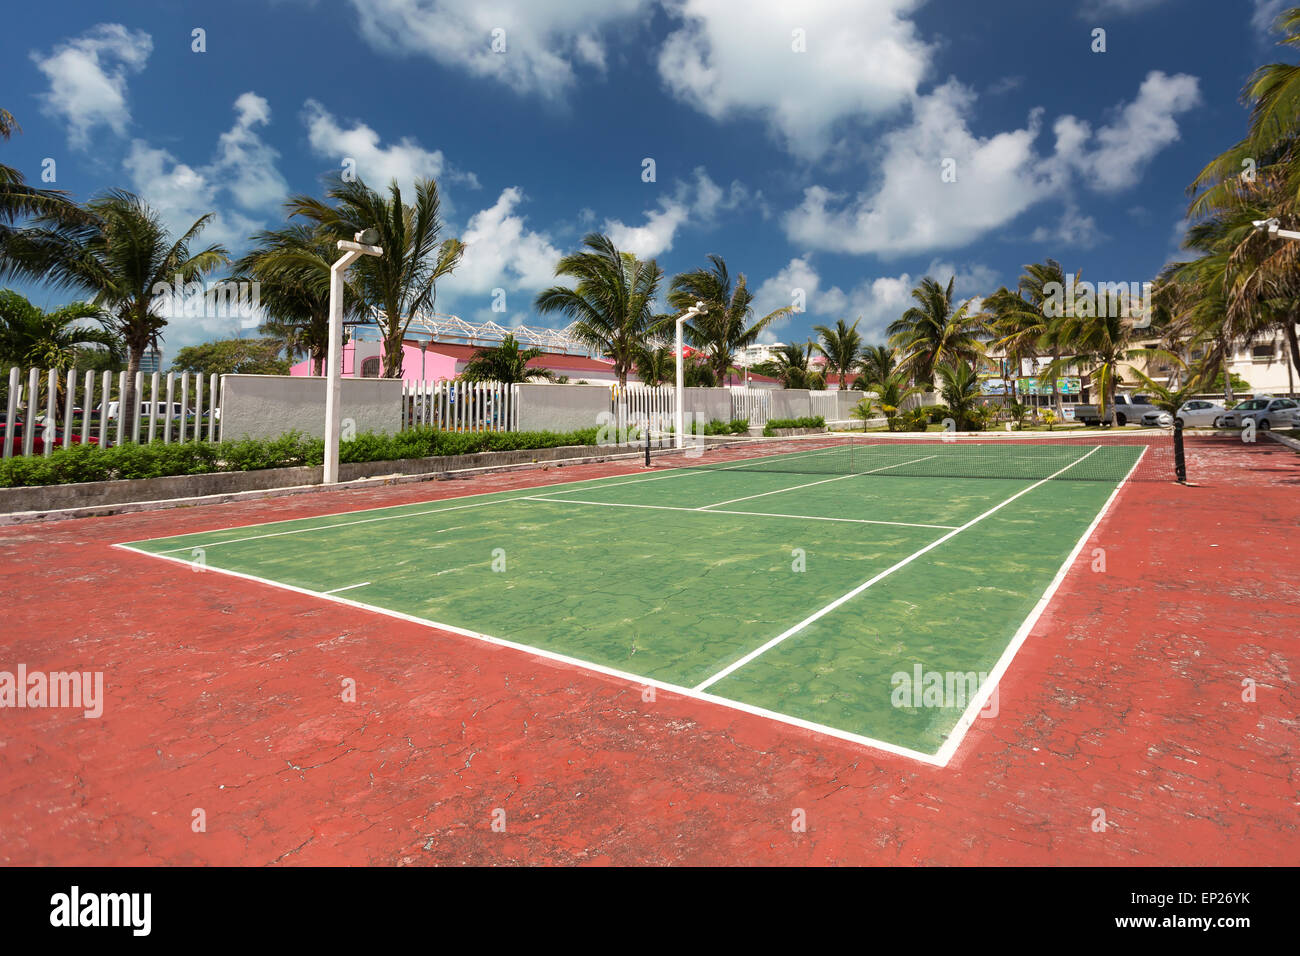 Leer: Tennisplatz im freien Stockfoto